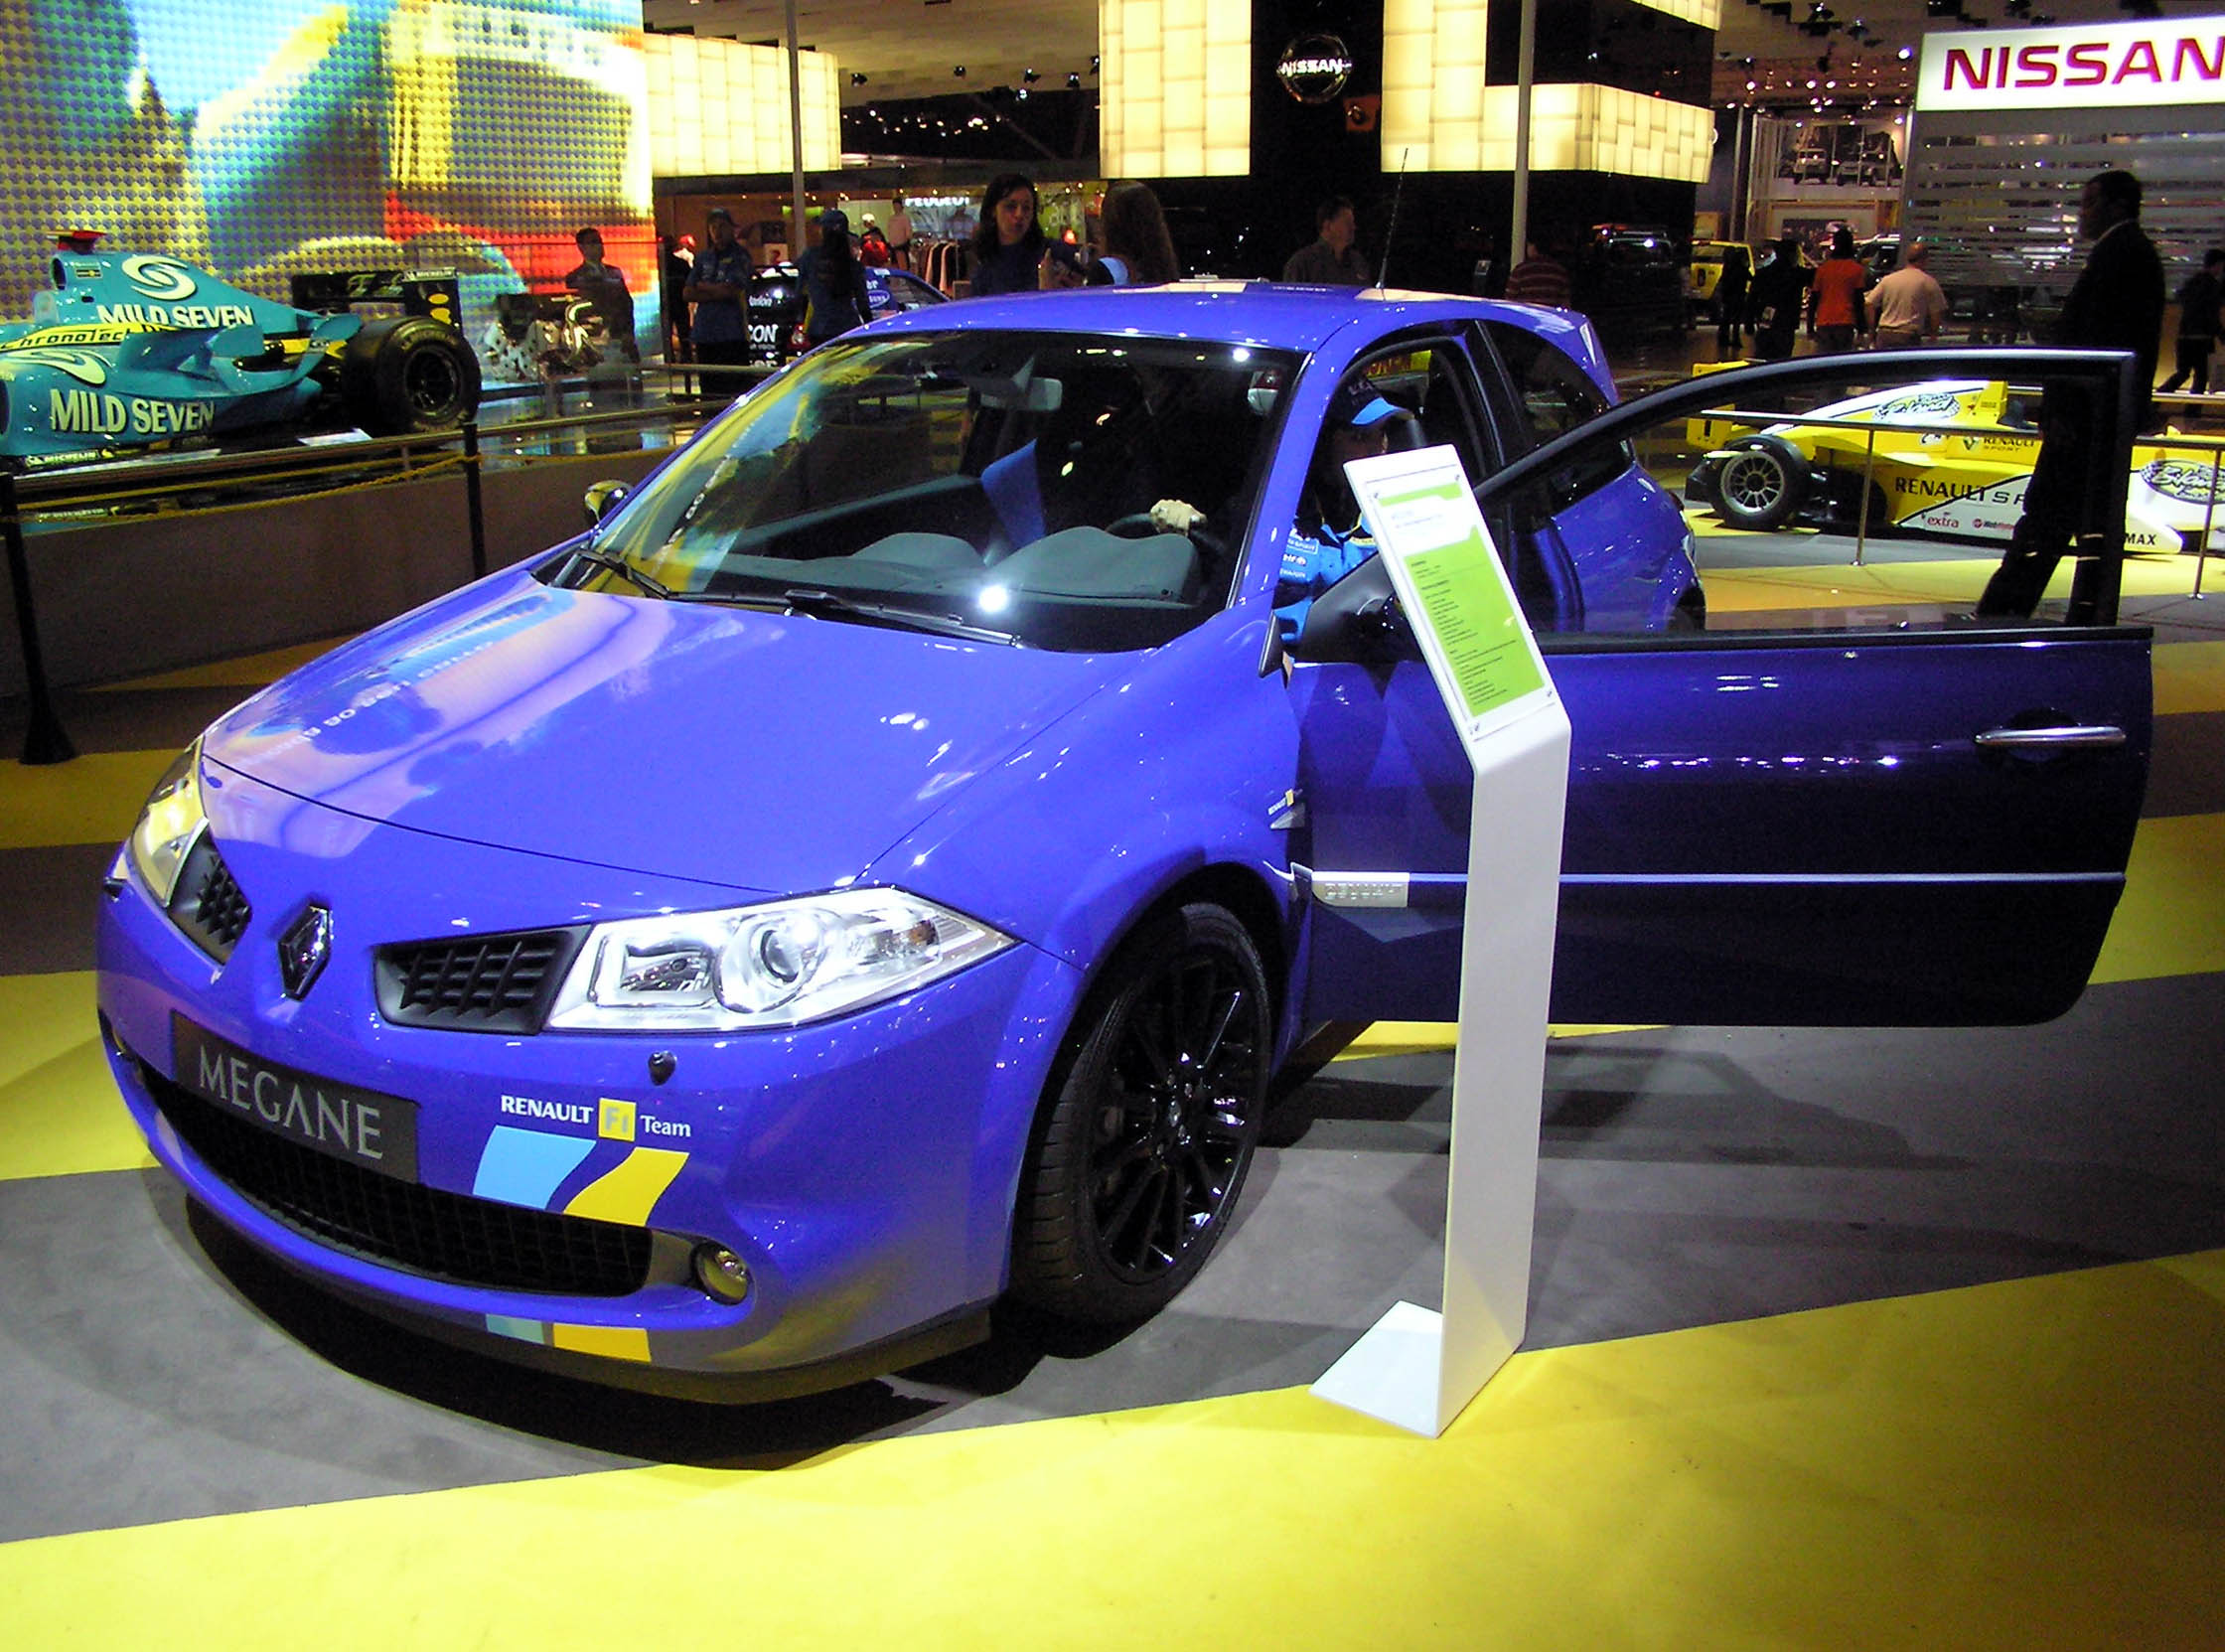 File:Renault Megane II Blue Front.jpg - Wikimedia Commons